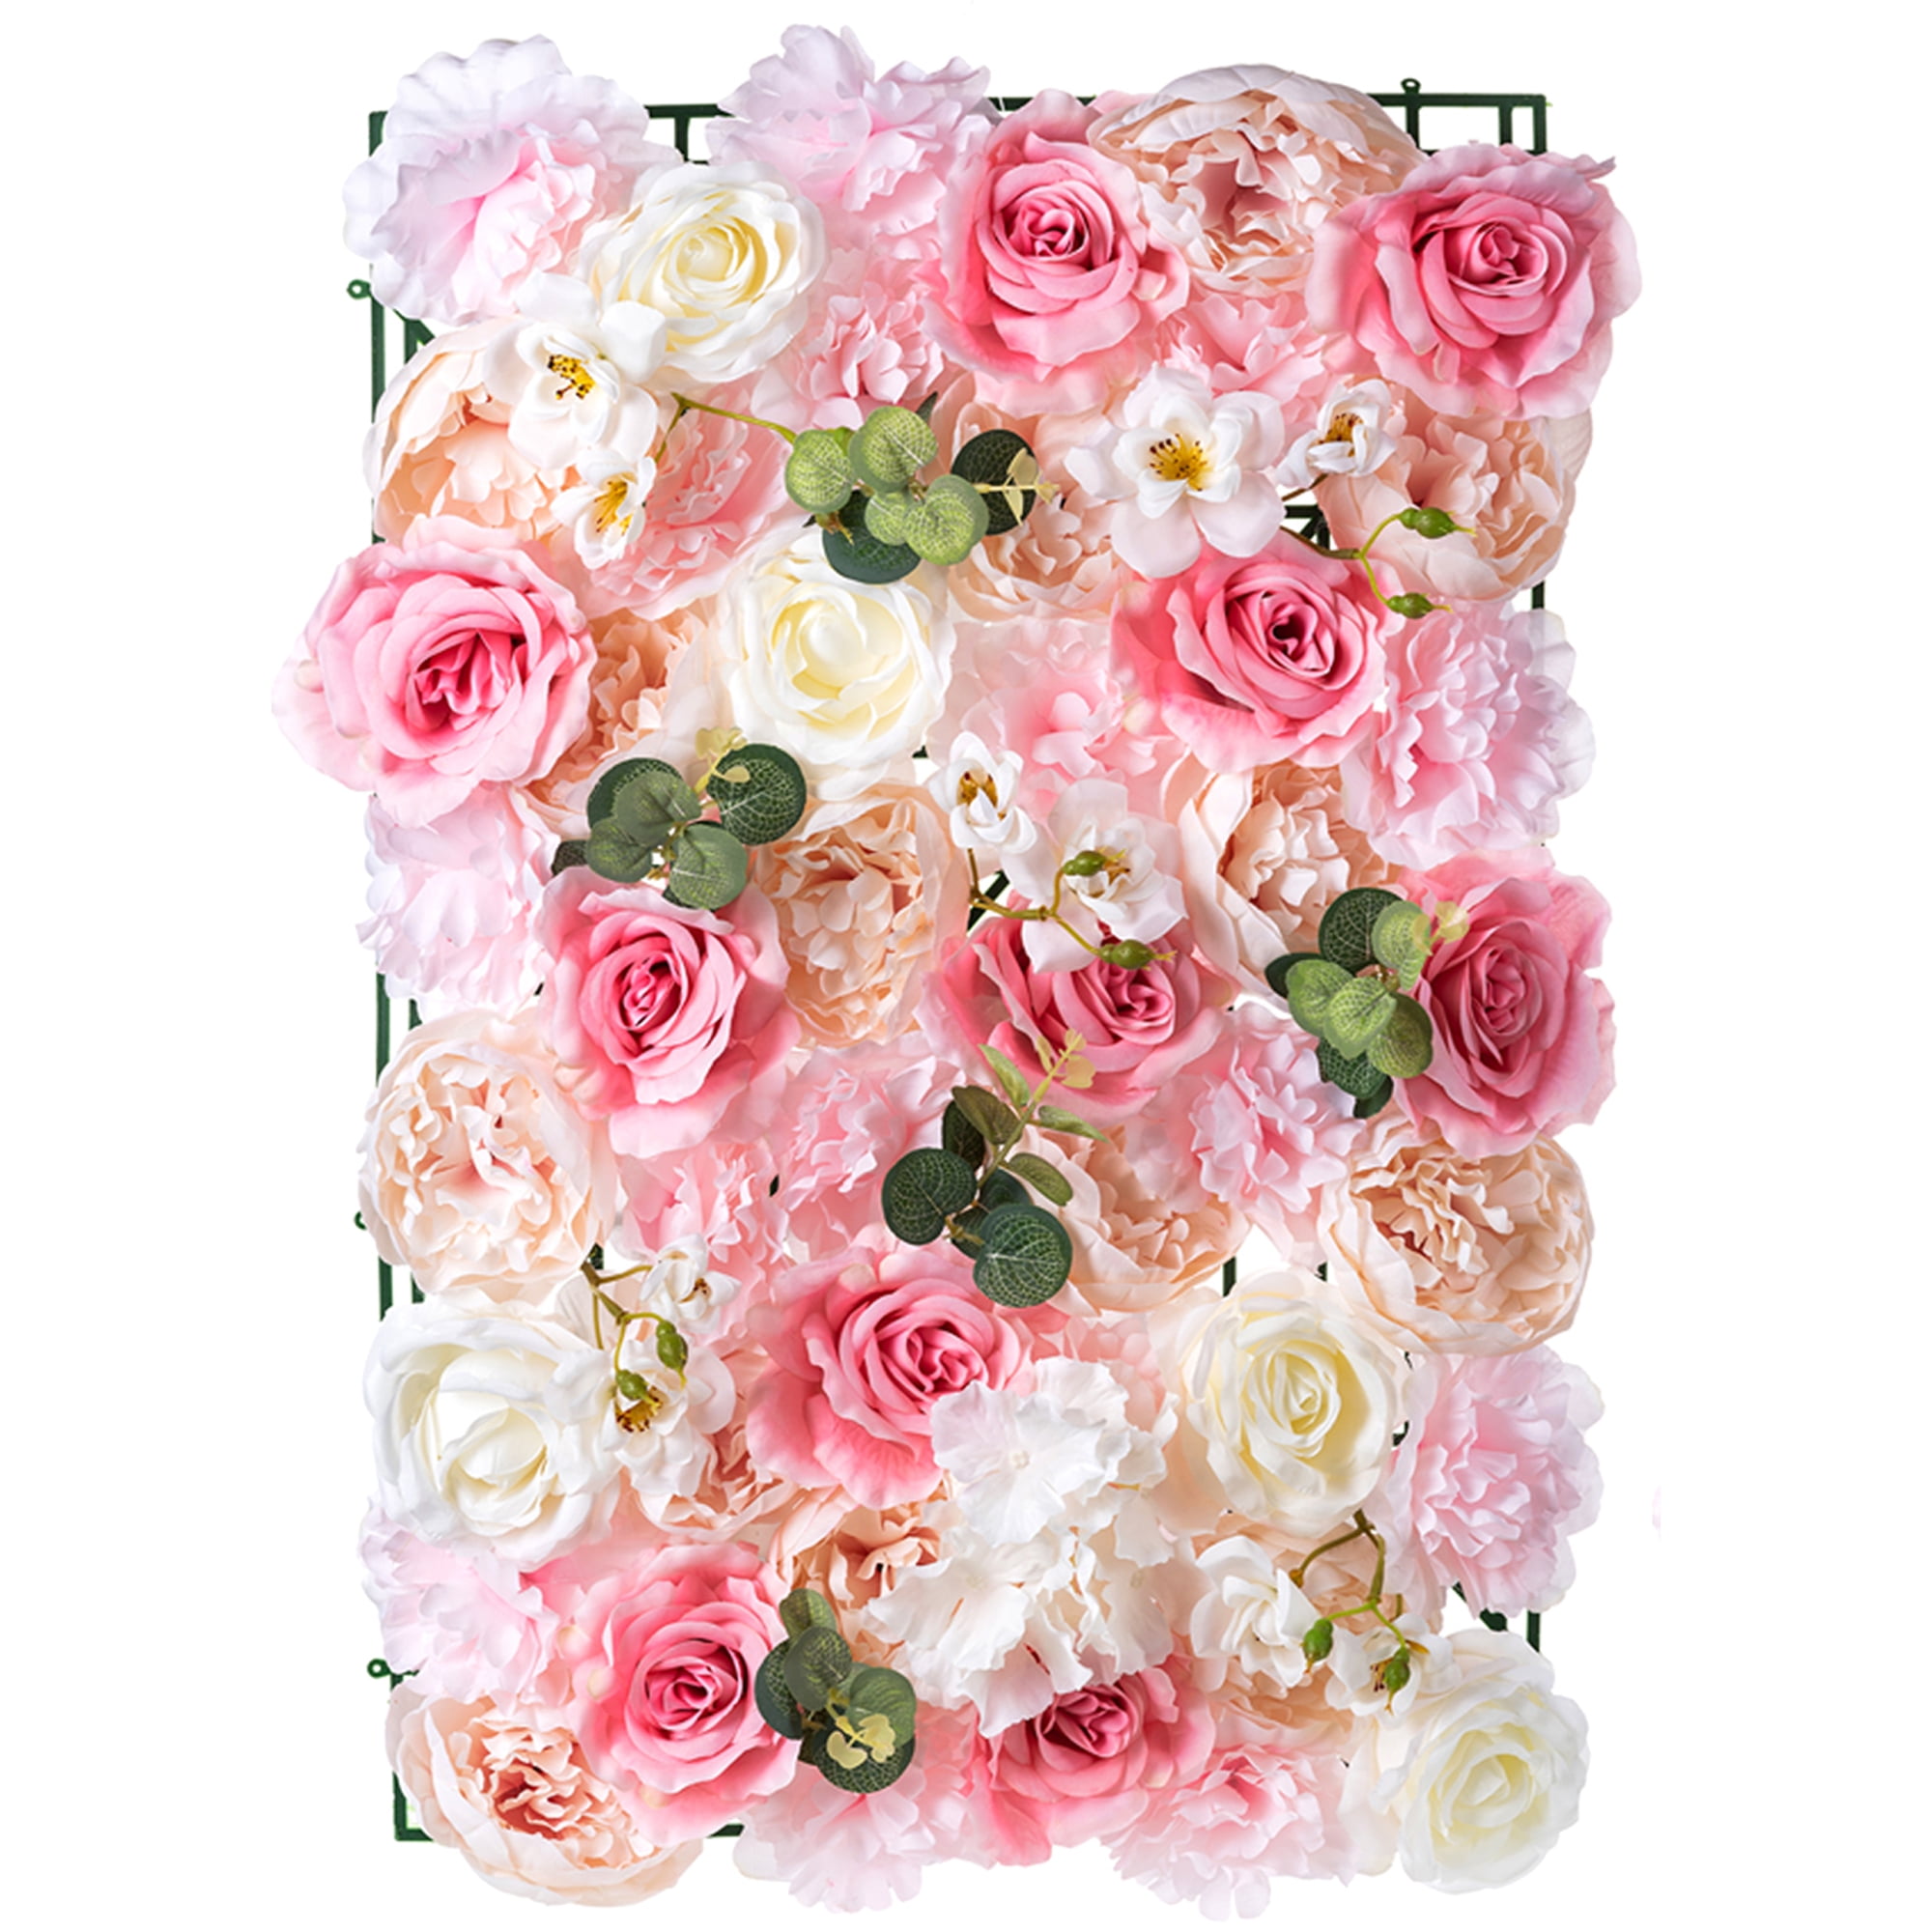 60x40cm Artificial Rose Flower Wall Panels Backdrop Bouquet Wedding Home Decor 